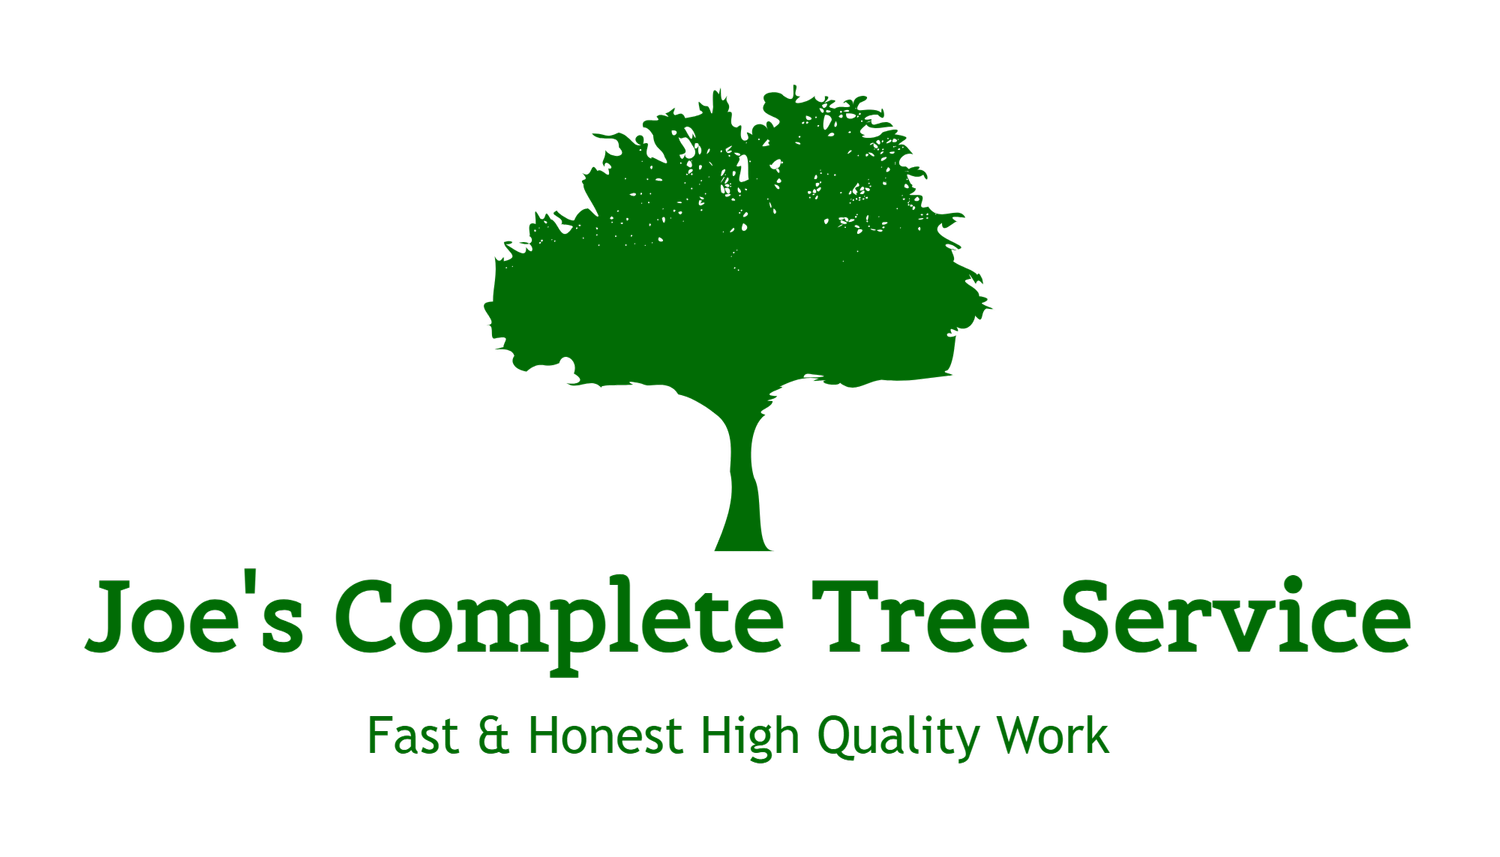 Joe's Complete Tree Service